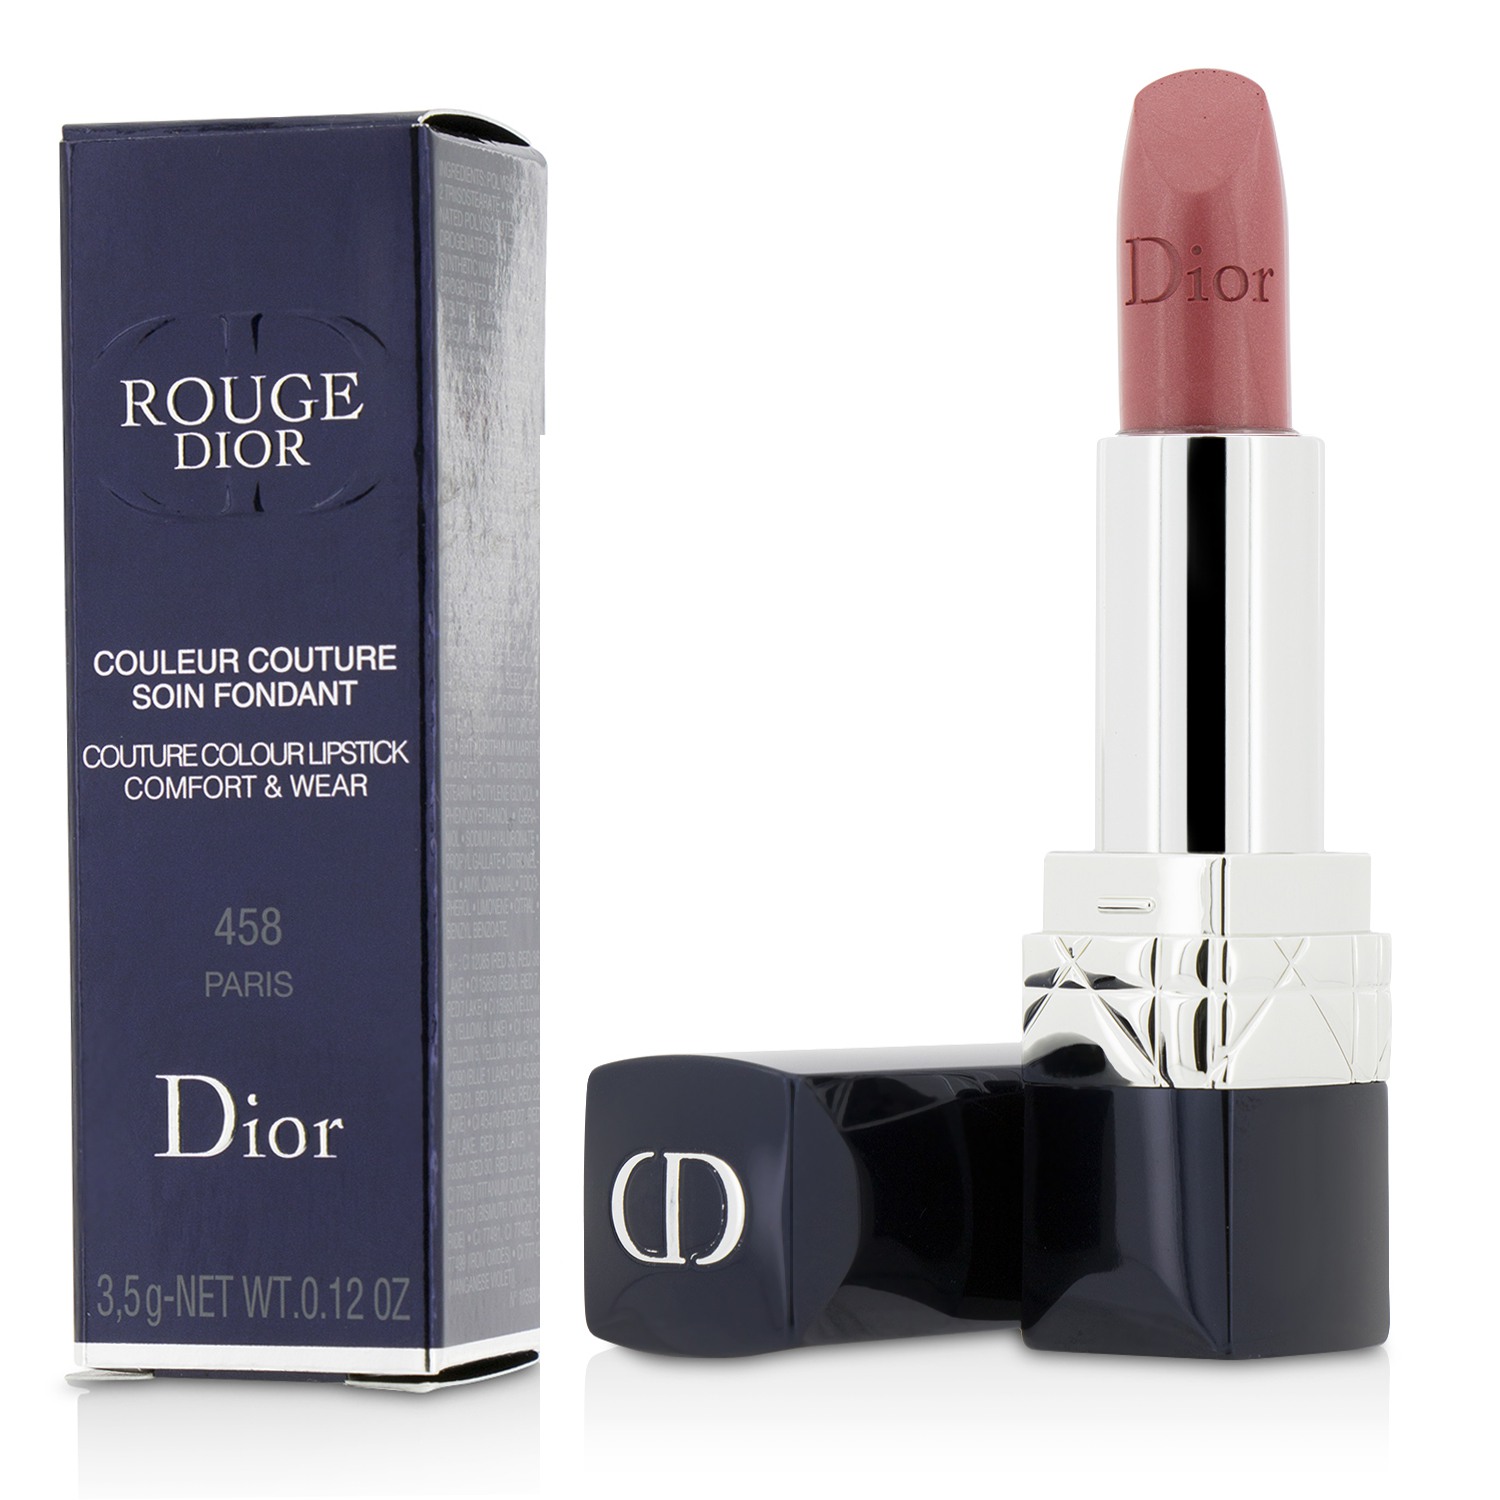 Rouge Dior Couture Colour Comfort & Wear Lipstick - # 458 Paris Christian Dior Image